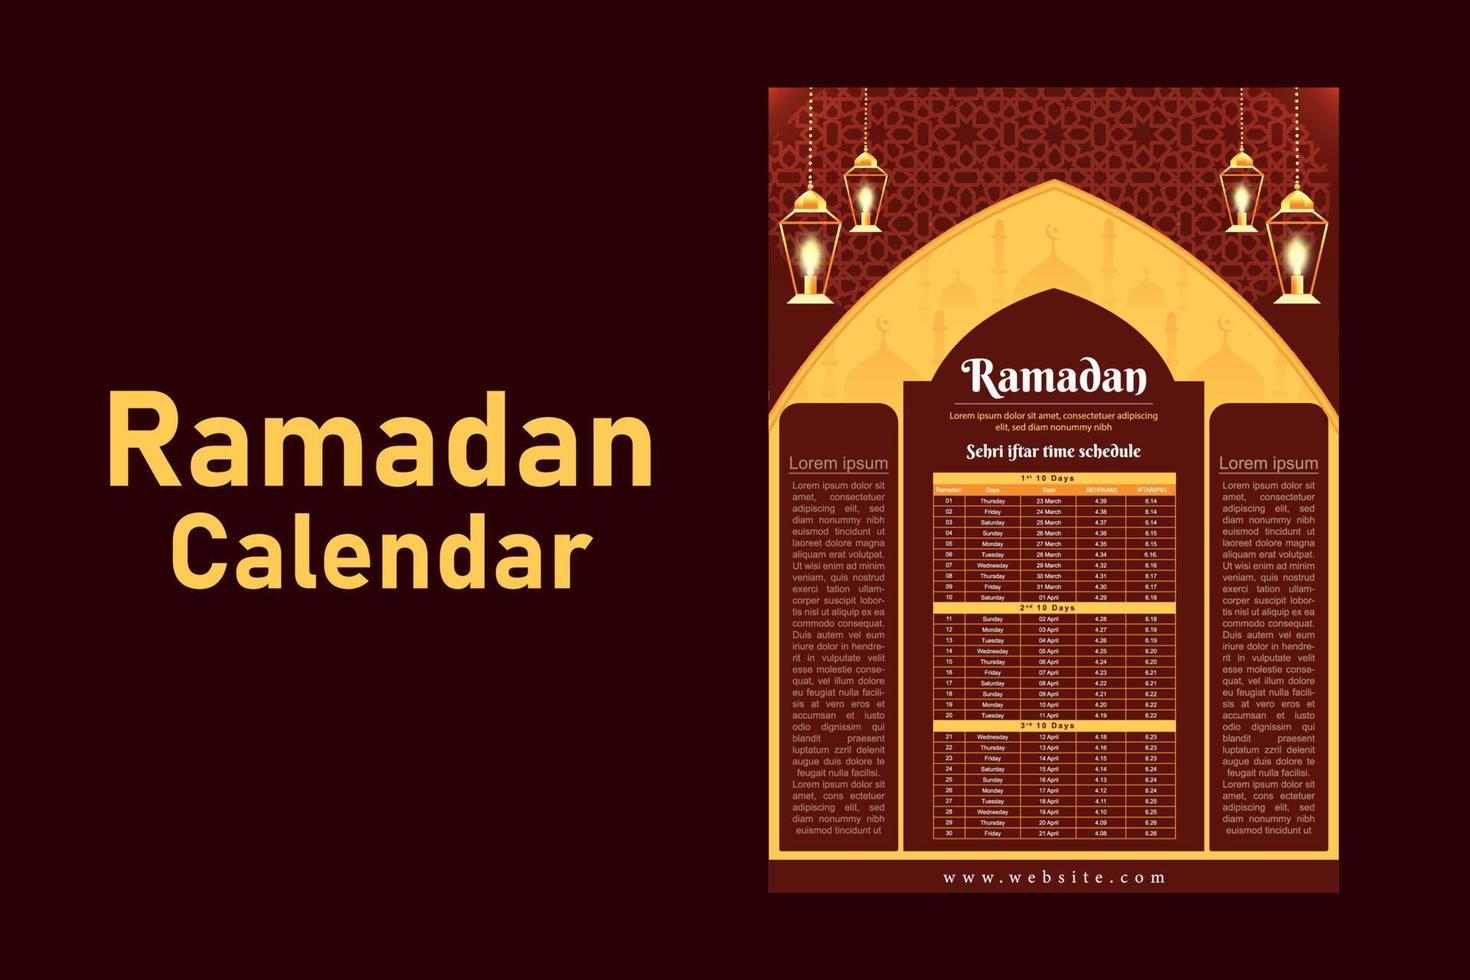 Ramadan Kareem Islamic calendar template and sehri ifter time schedule vector